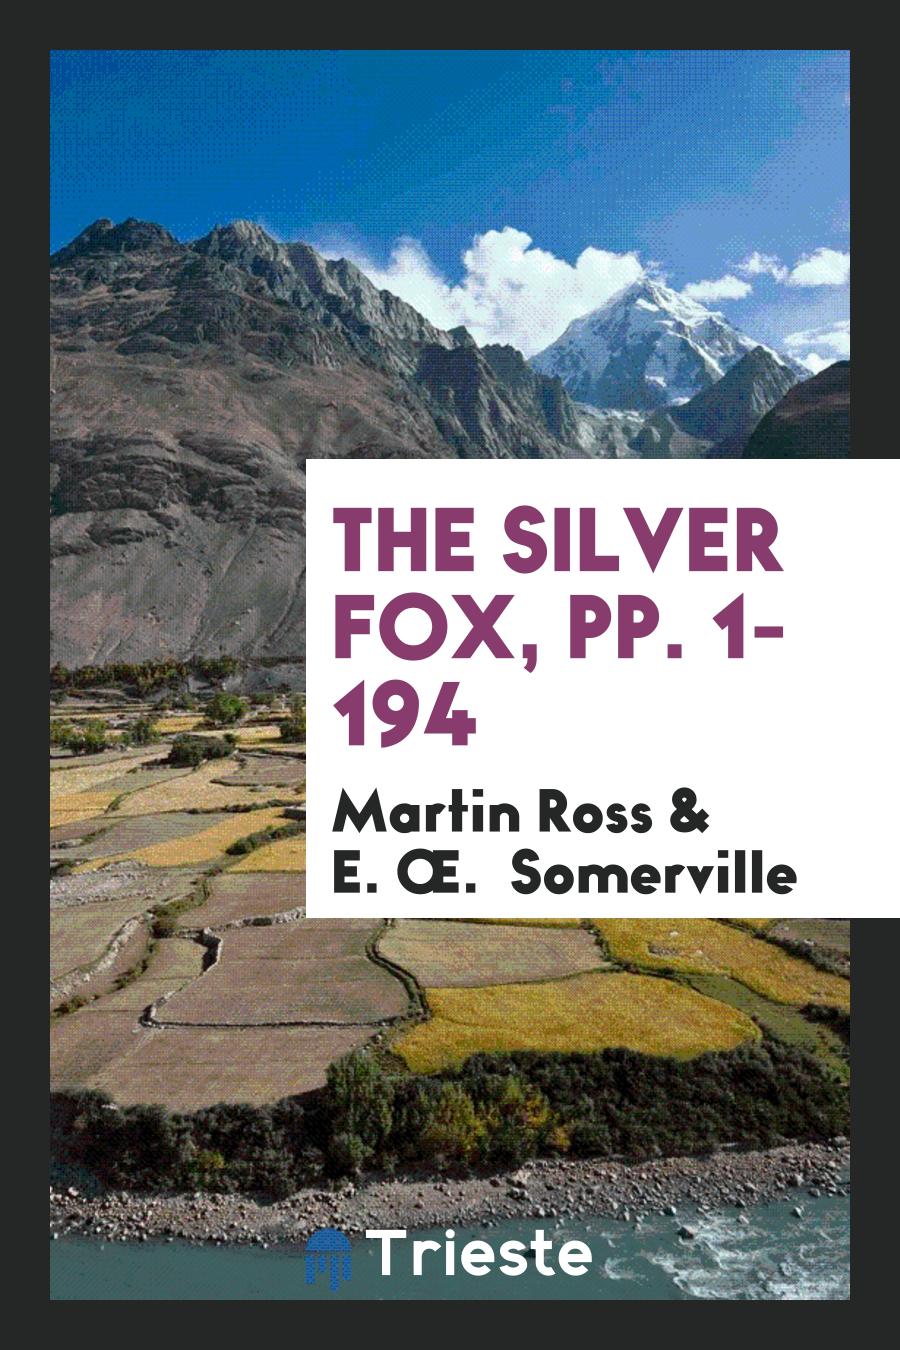 The Silver Fox, pp. 1-194